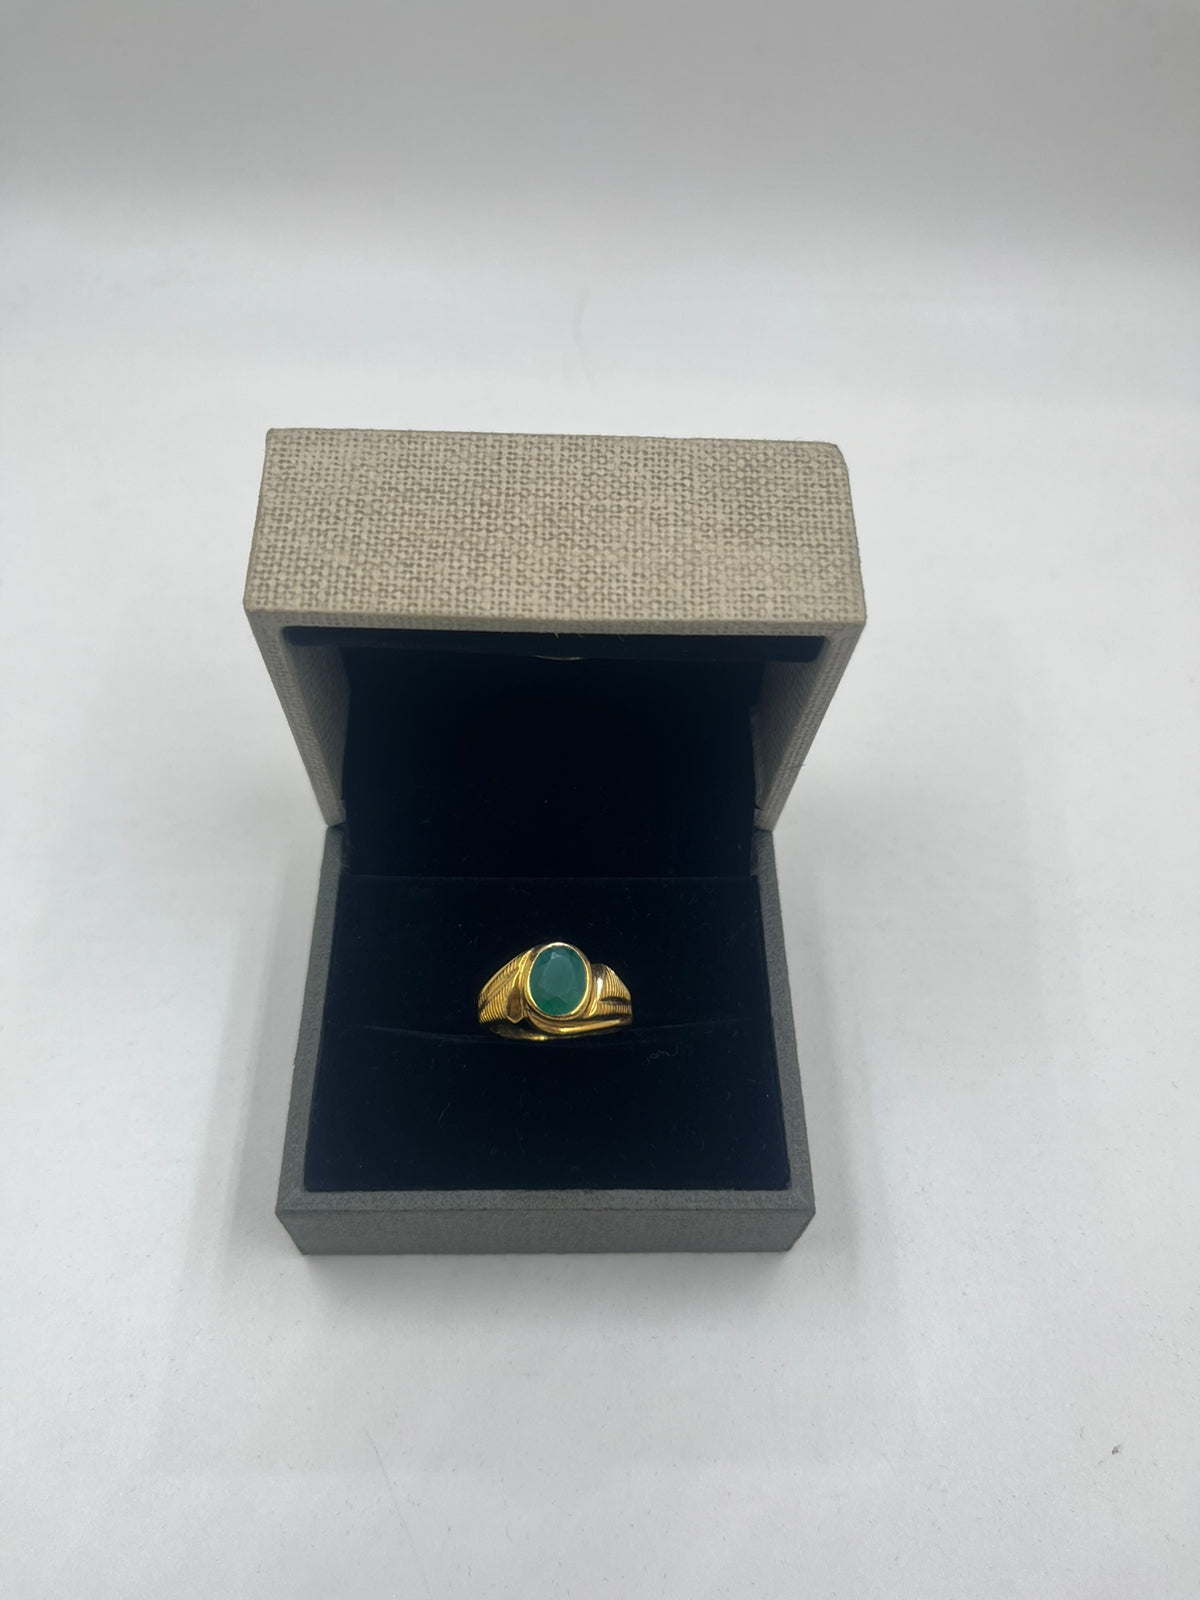 SZ:8 US Natural Emerald Panna Gemstone 14K Yellow Gold Ring Certified  Jewelry | eBay